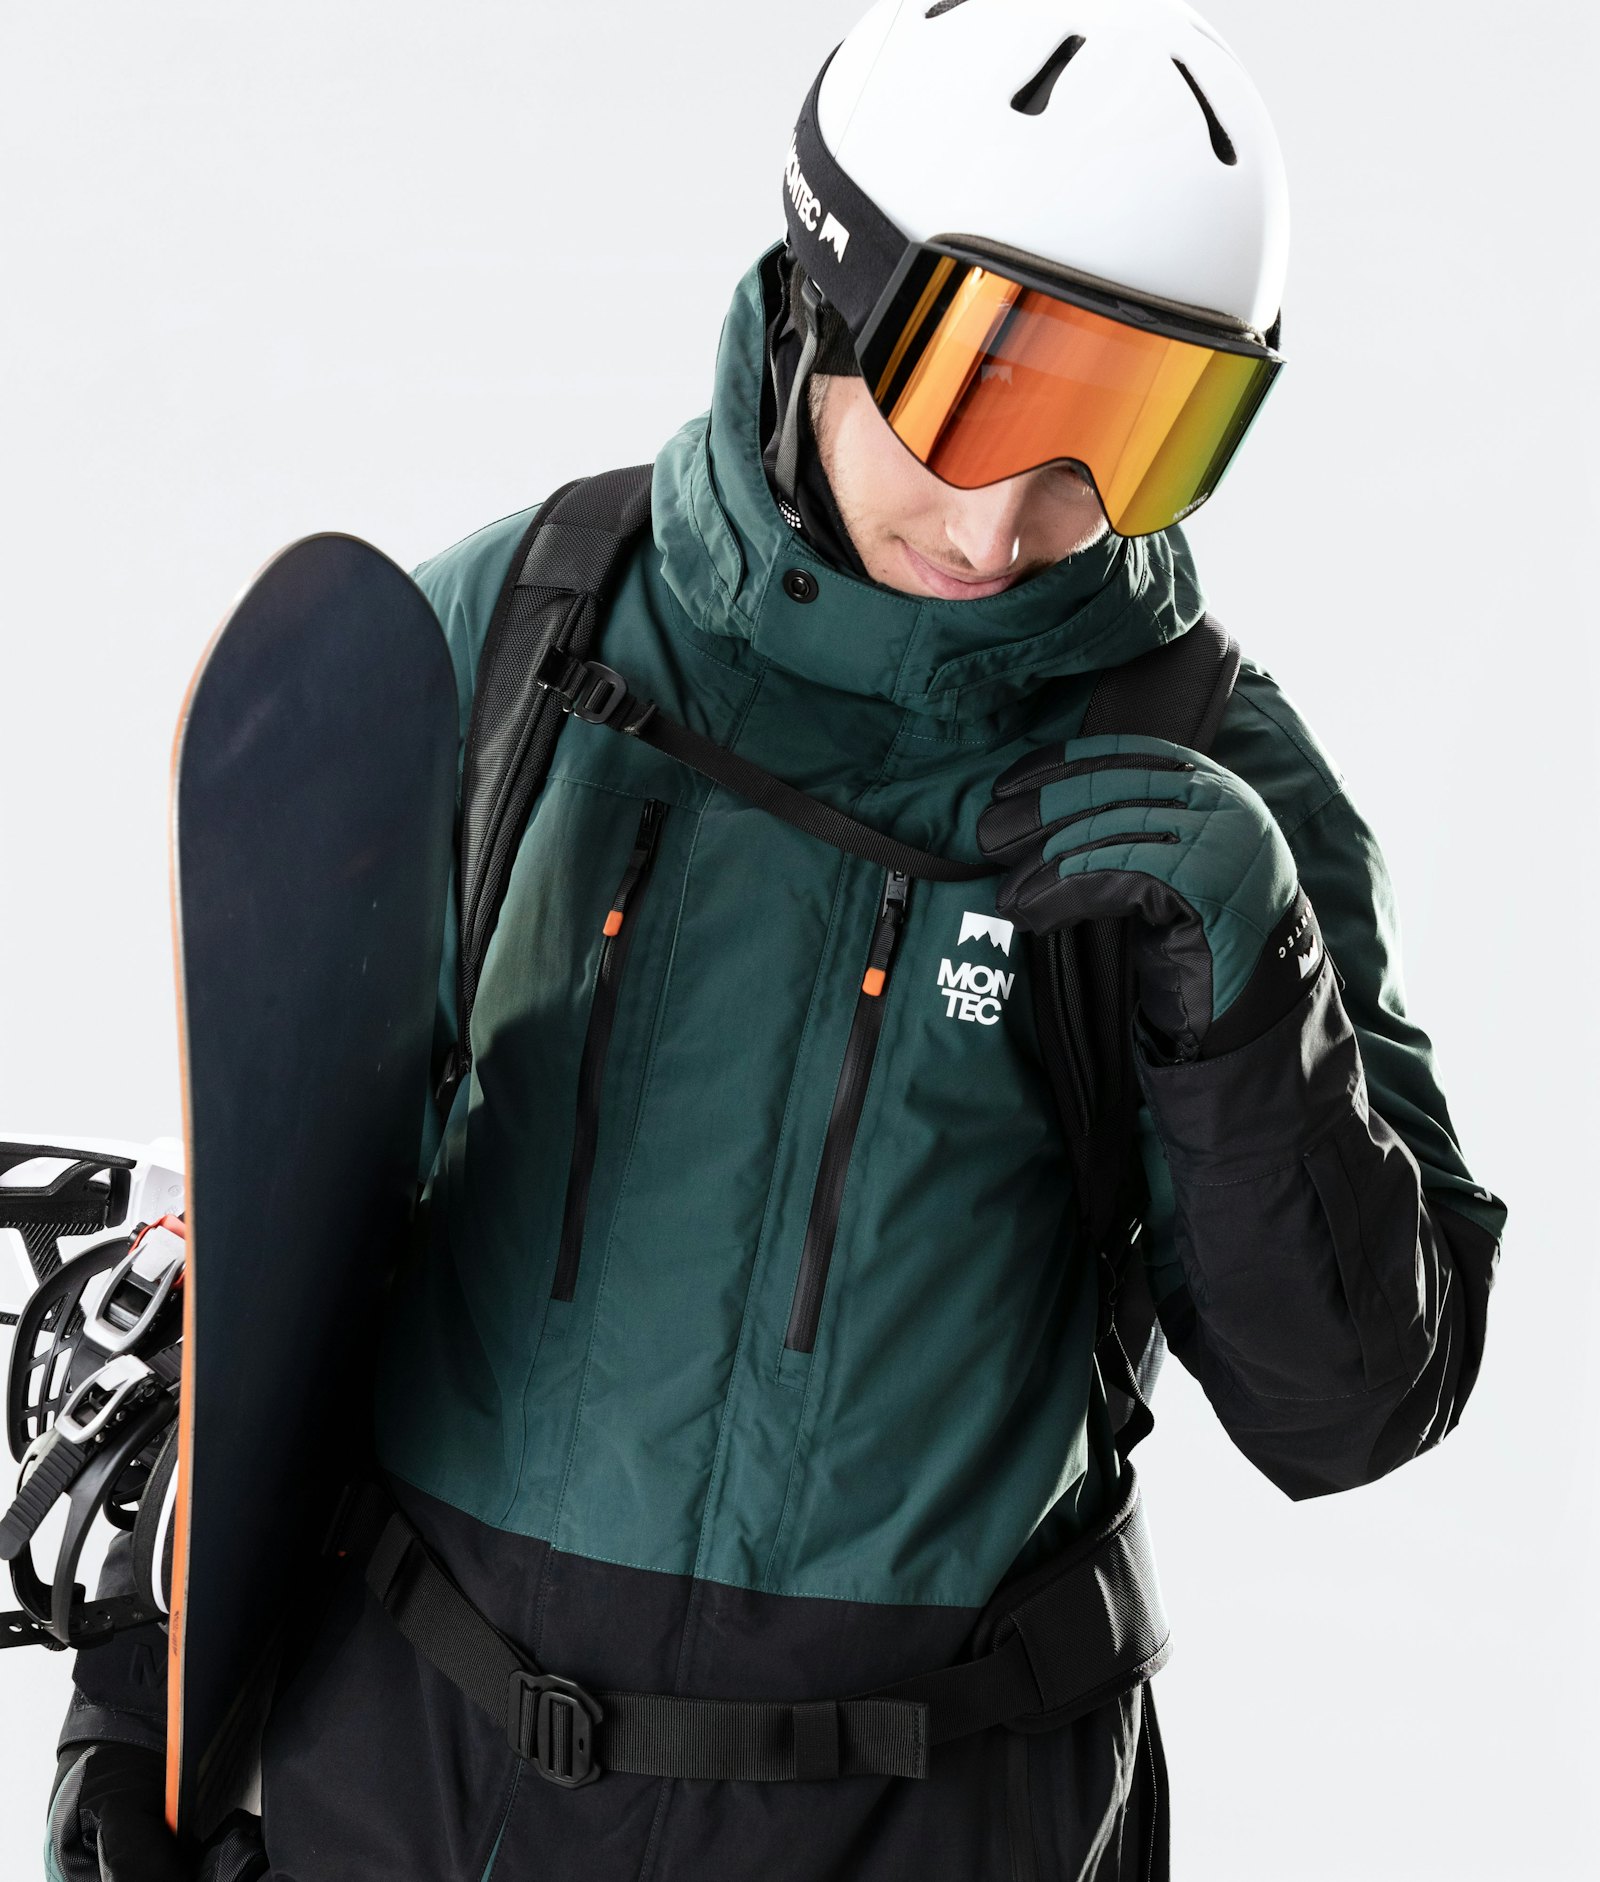 Fawk 2020 Veste Snowboard Homme Dark Atlantic/Black, Image 2 sur 8